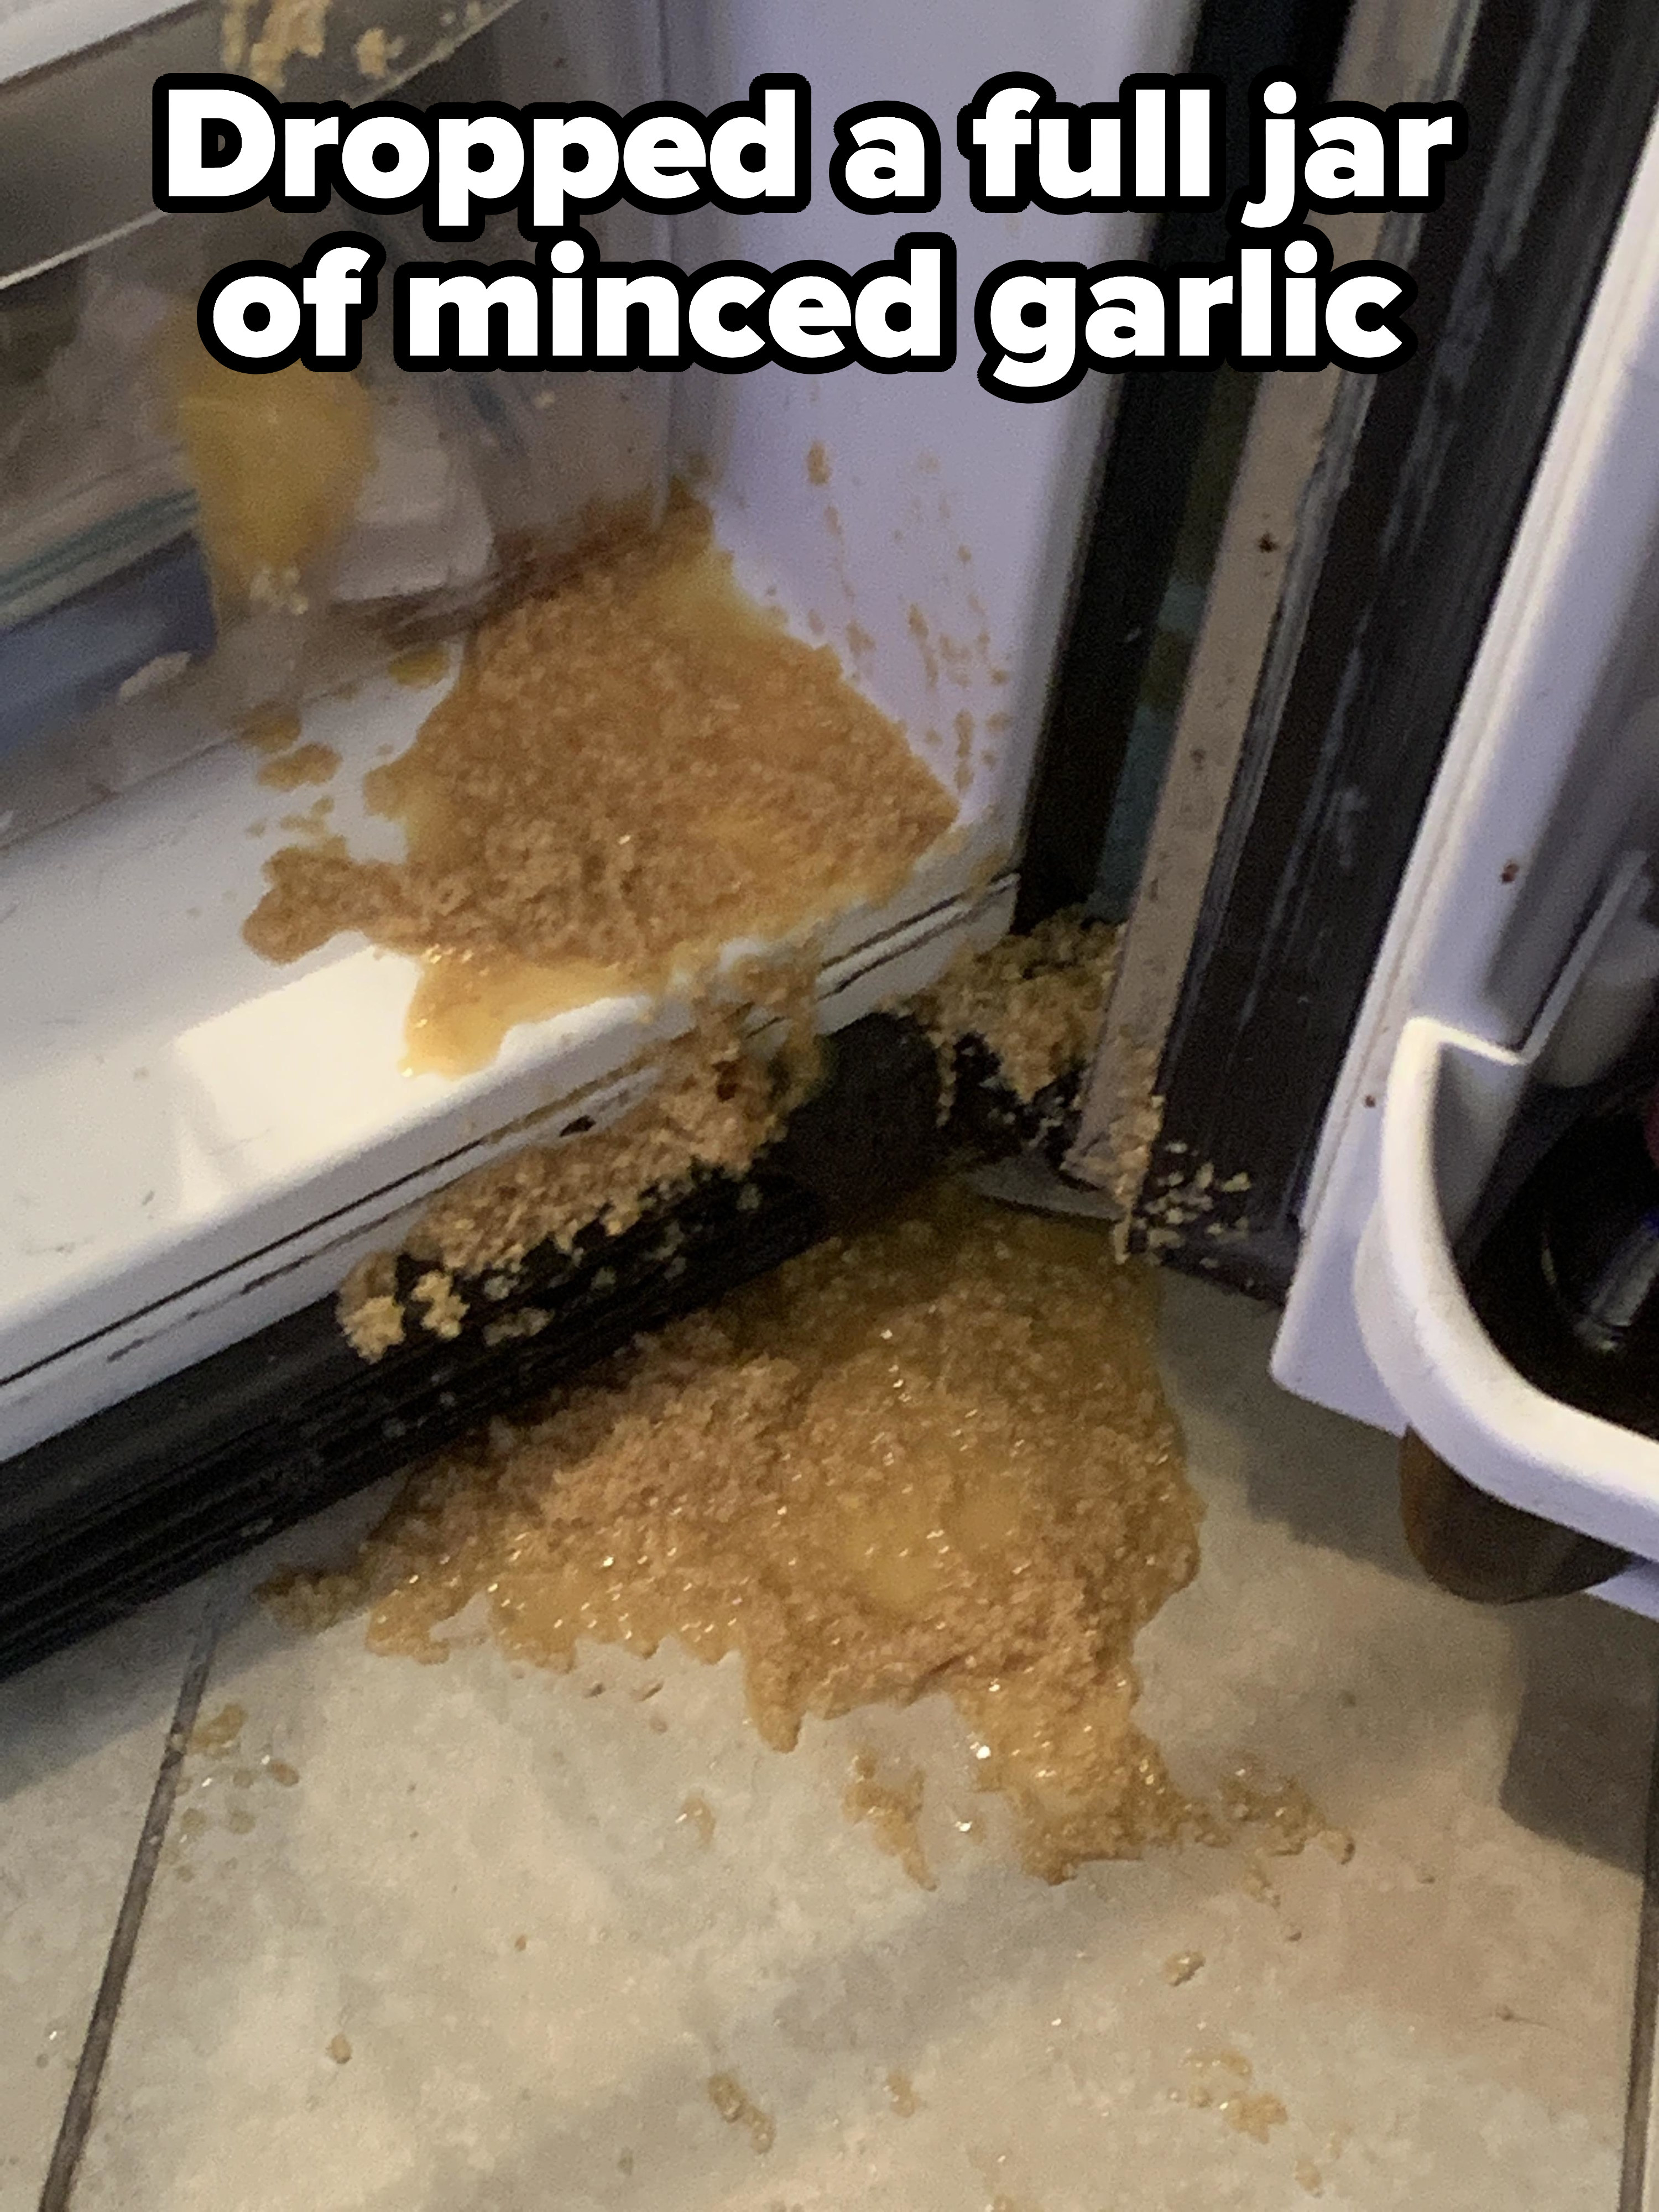 full jar of minced garlic spilled all over a fridge